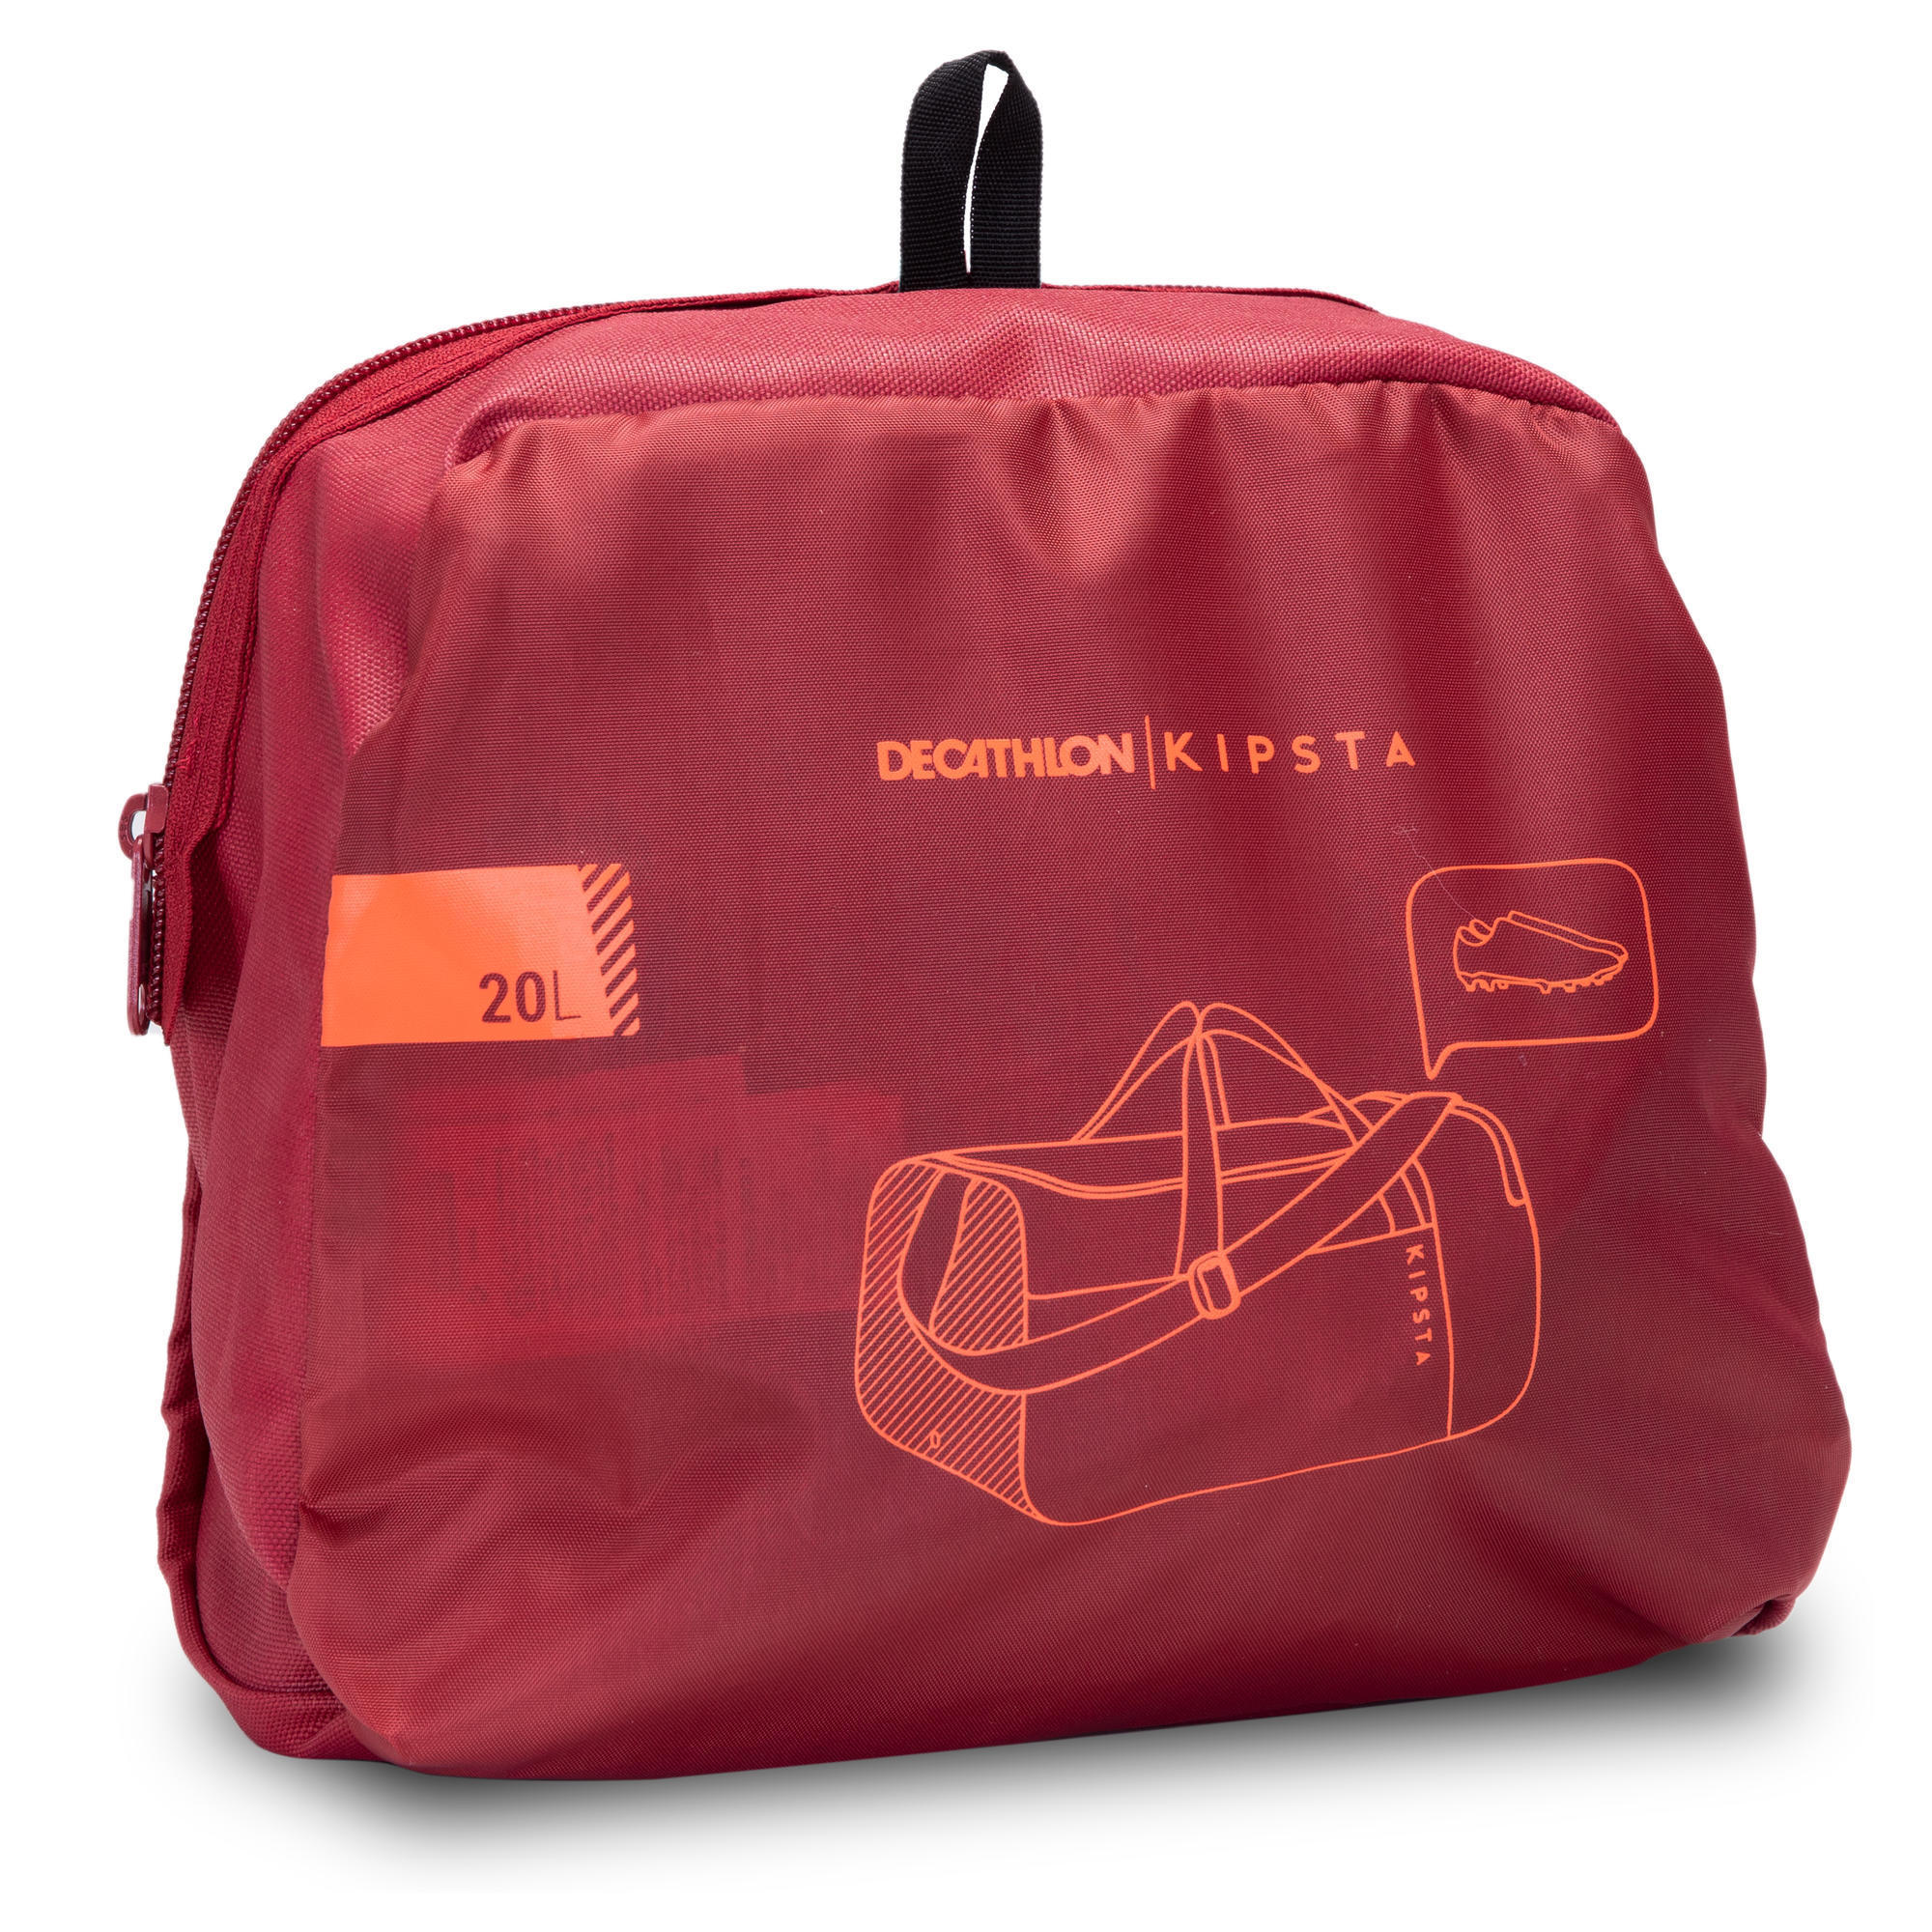 decathlon football kit bag